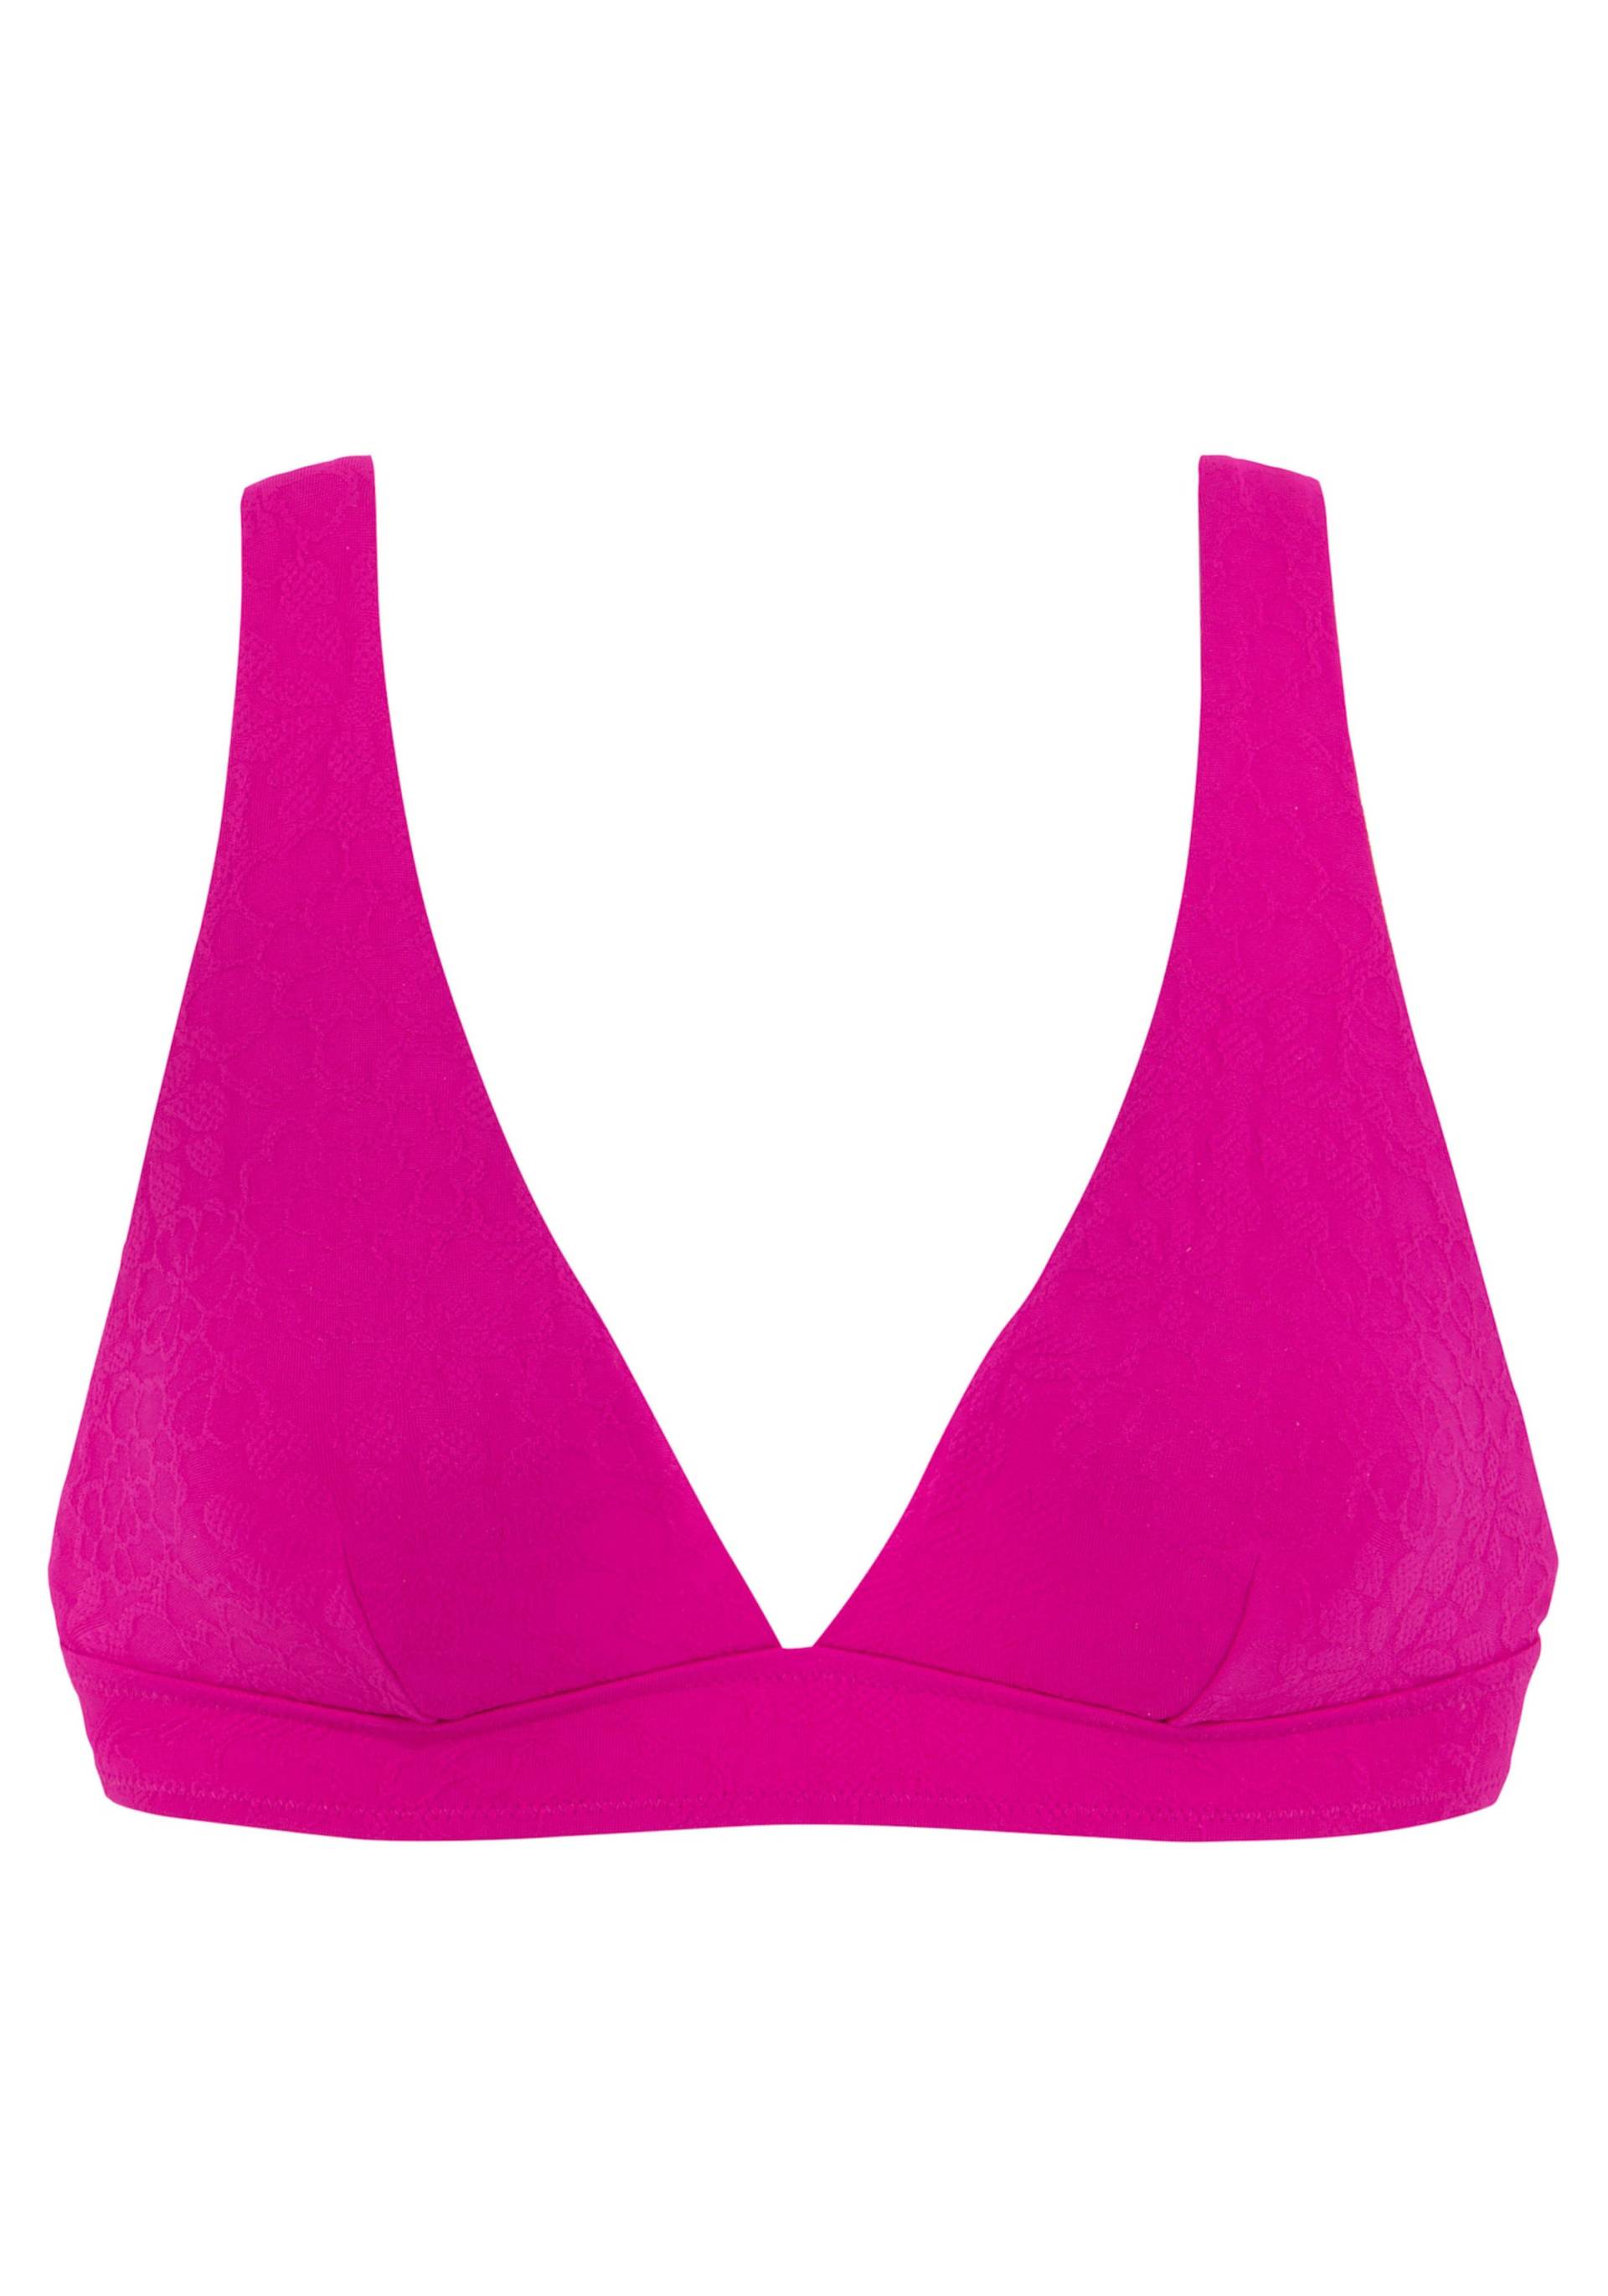 Triangel-Bikini-Top in pink von Buffalo